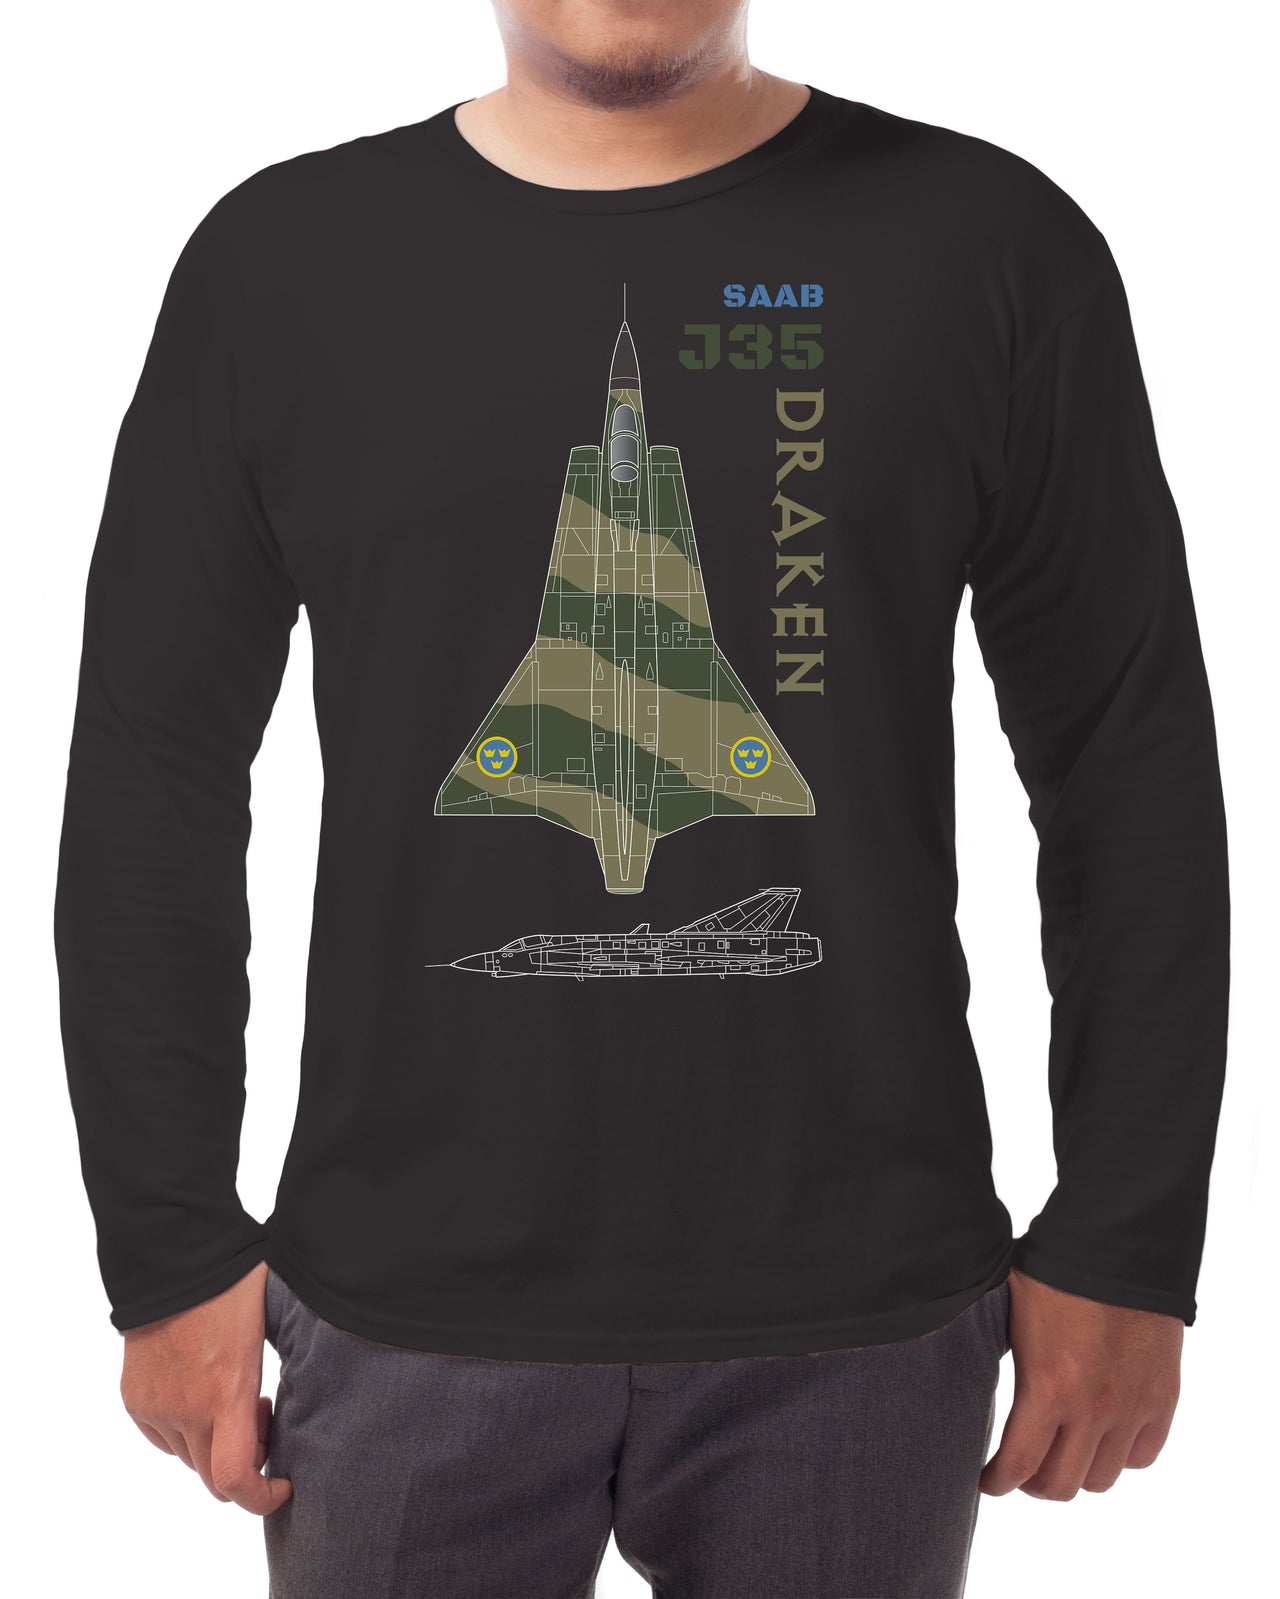 Saab Draken - Long-sleeve T-shirt